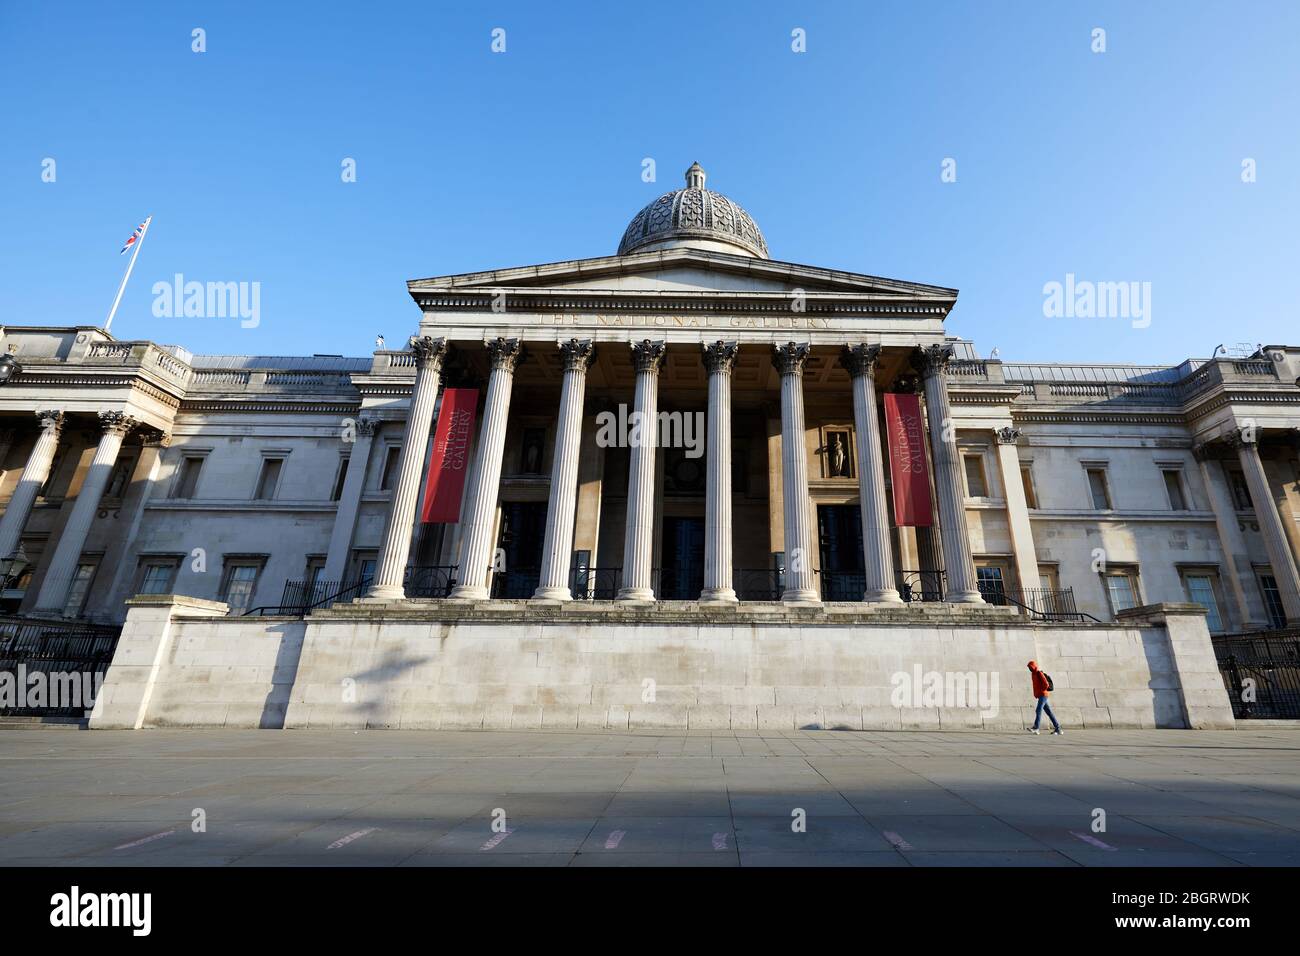 London, U.K. - 22 Apr 2020: A man walks past the National Gallery, deserted during the coronavirus lockdown. Stock Photo